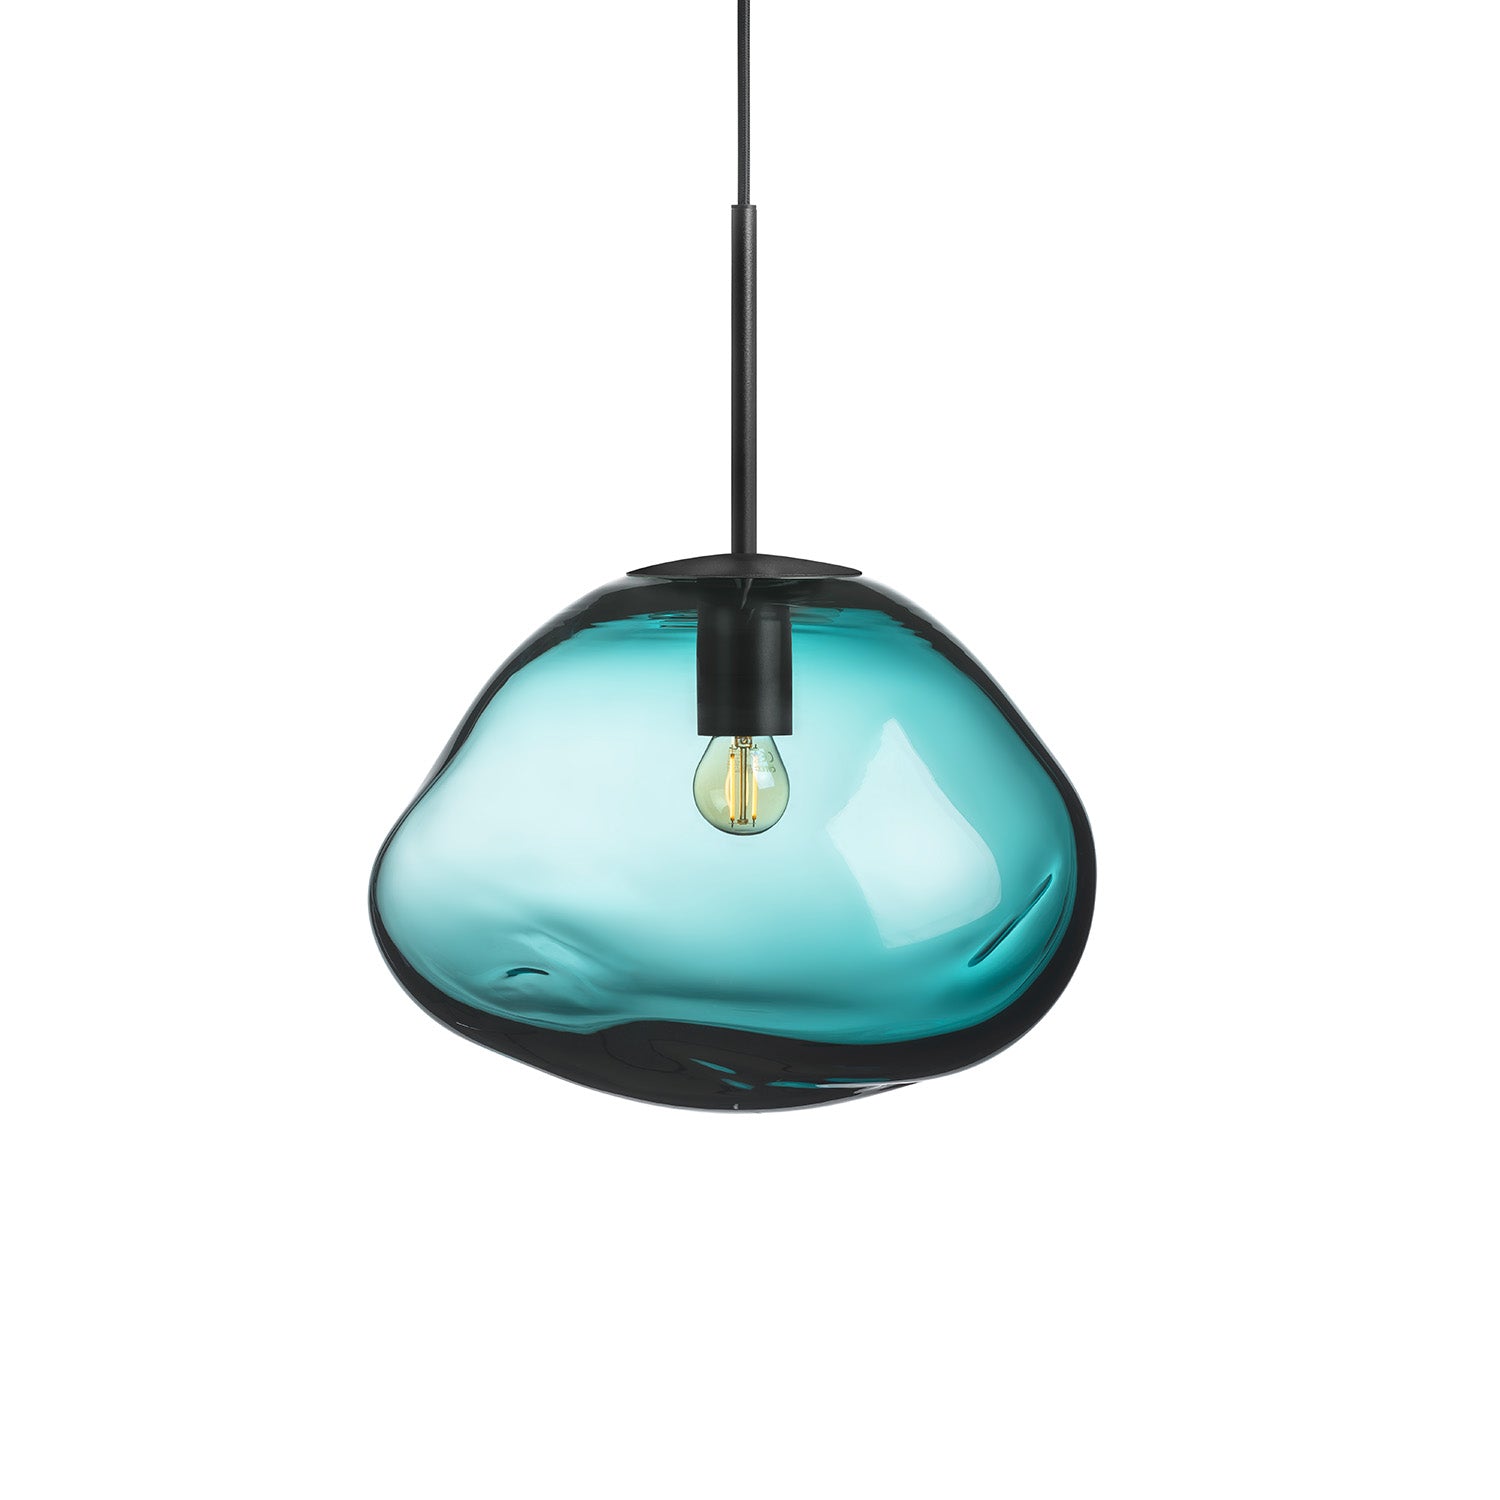 CRYSTAL STONE - Blown glass pebble pendant light